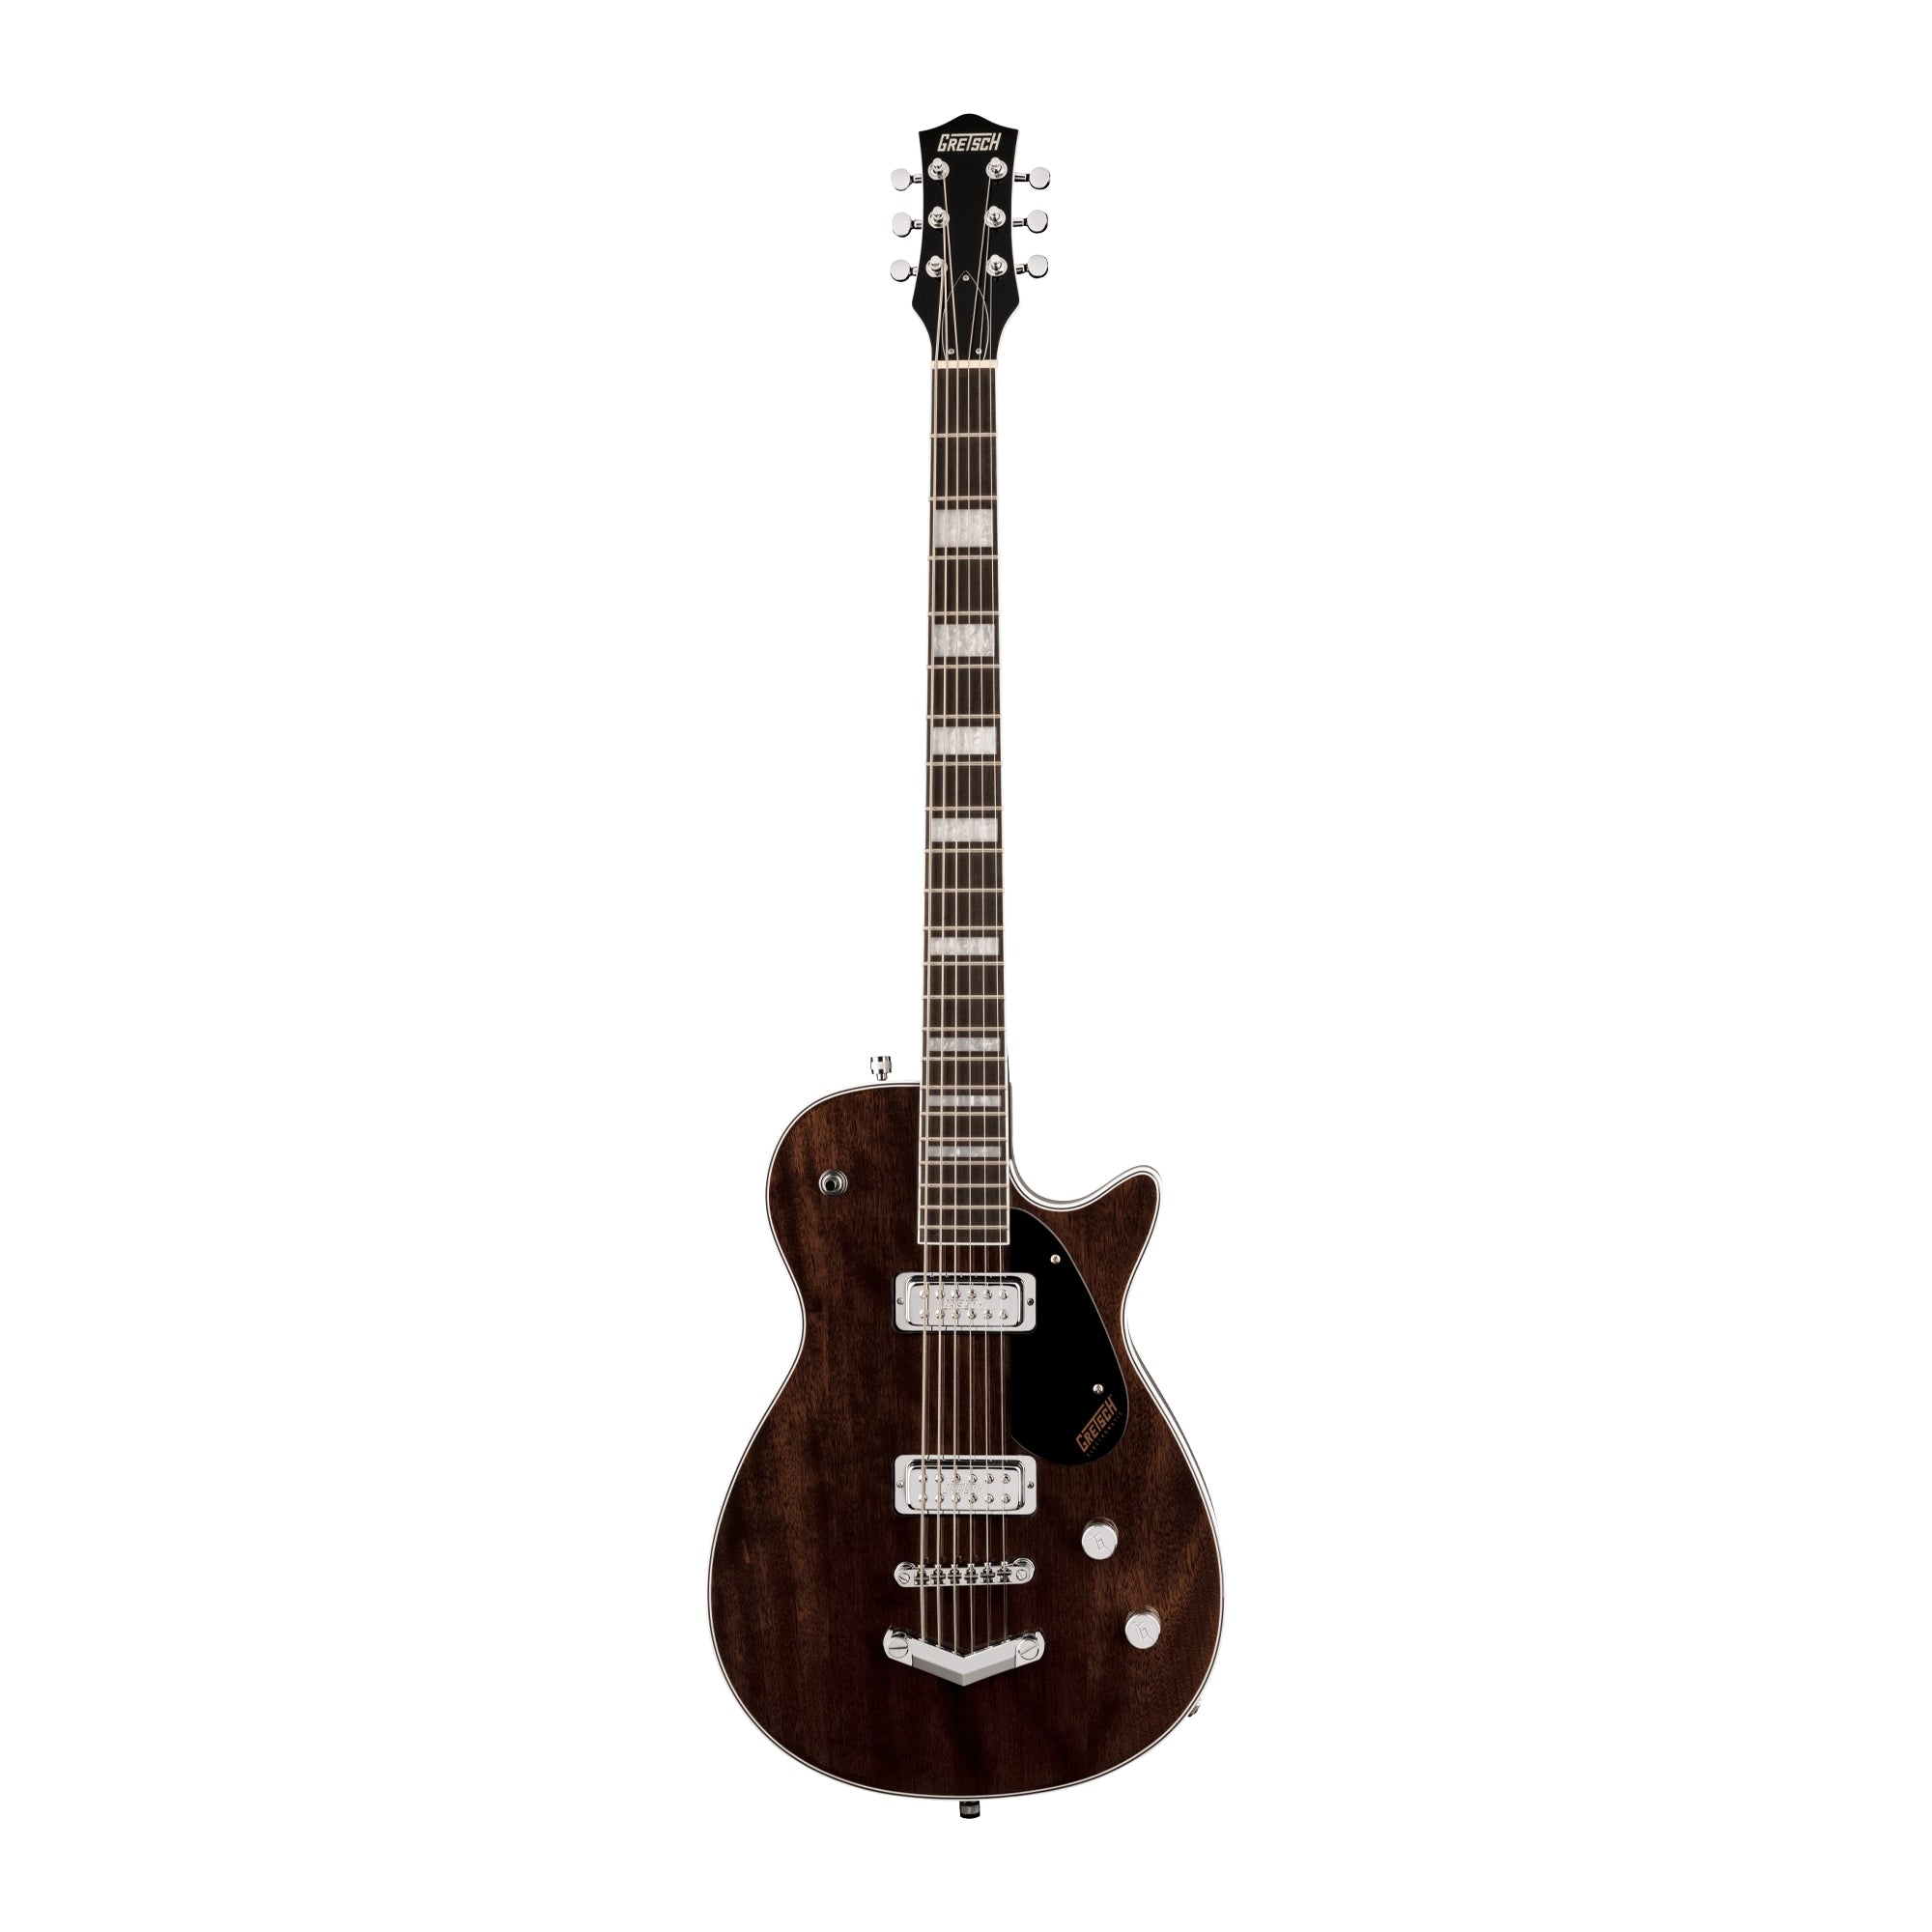 Grestch G5260 Electromatic Jet Electric Baritone Guitar - Imperial Stain